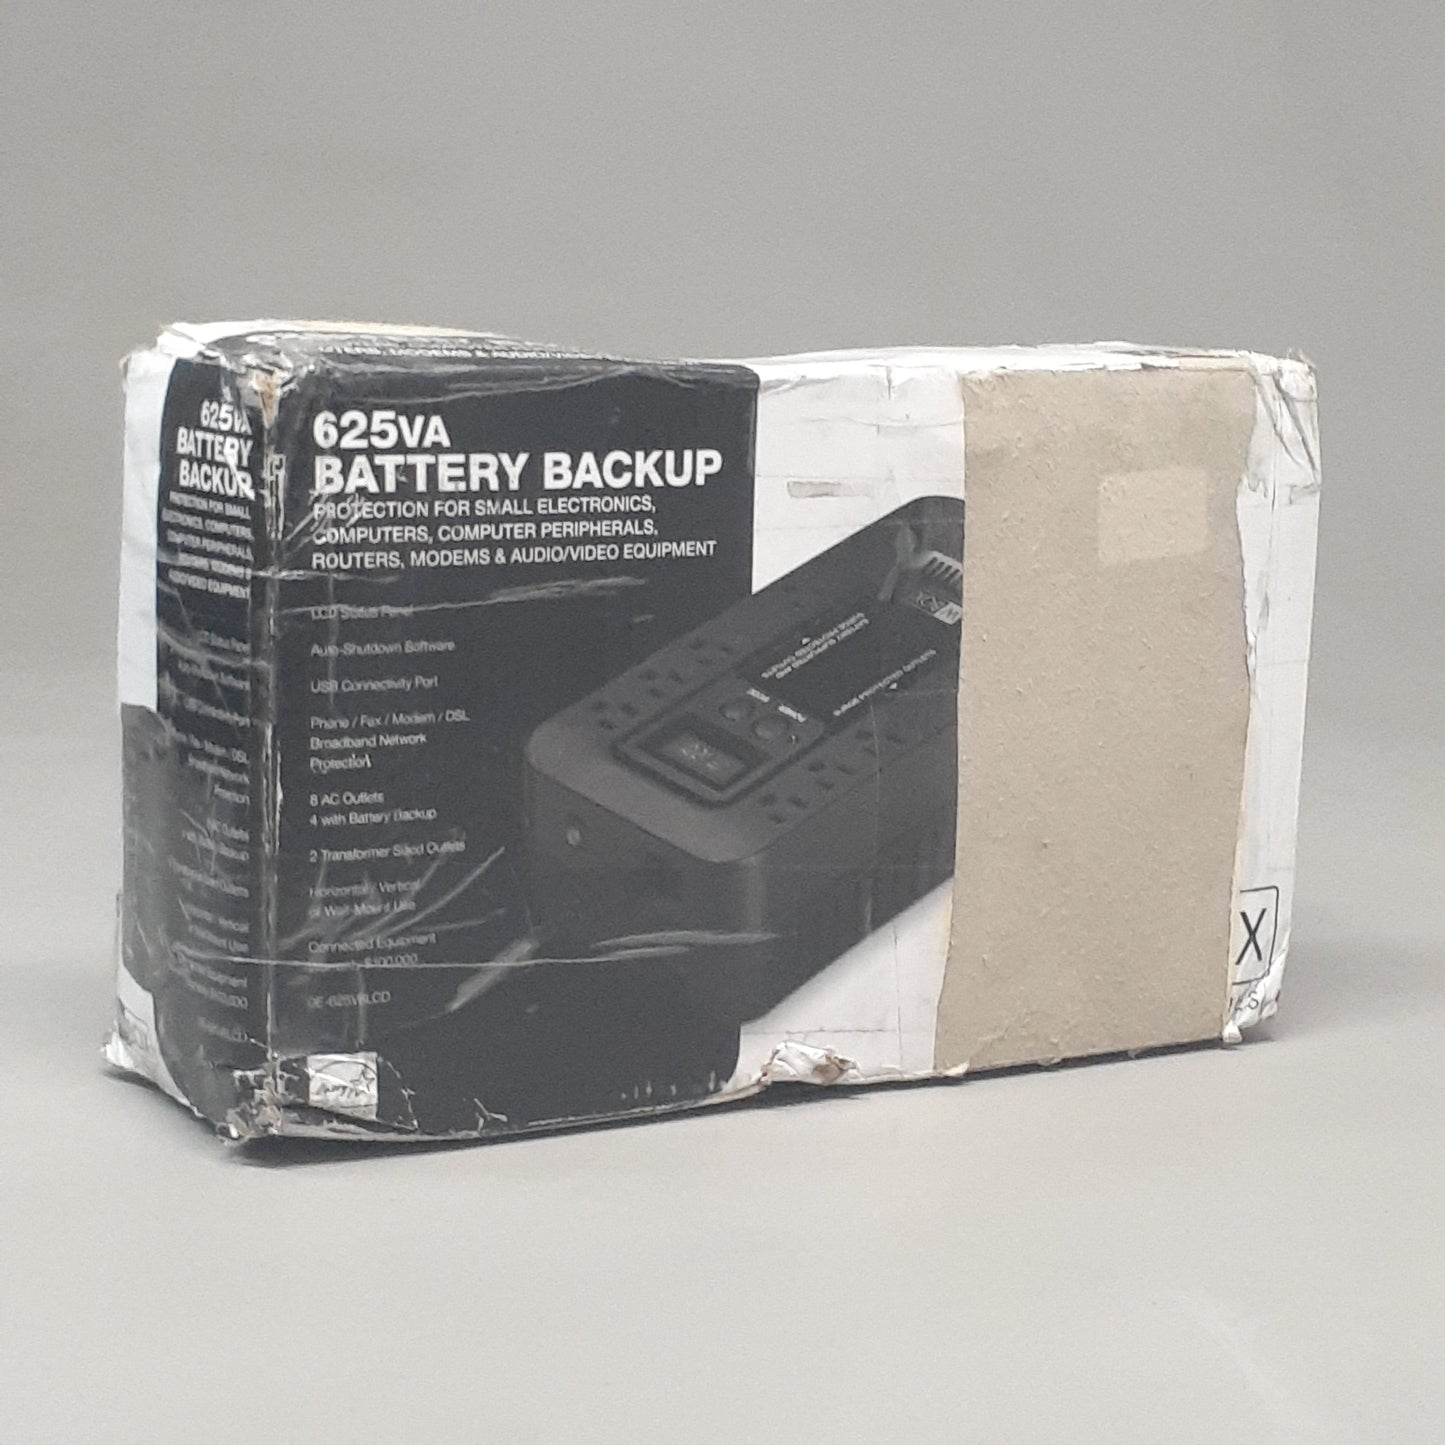 W BOX Battery Backup Standby UPS, 625VA, 390W (New)